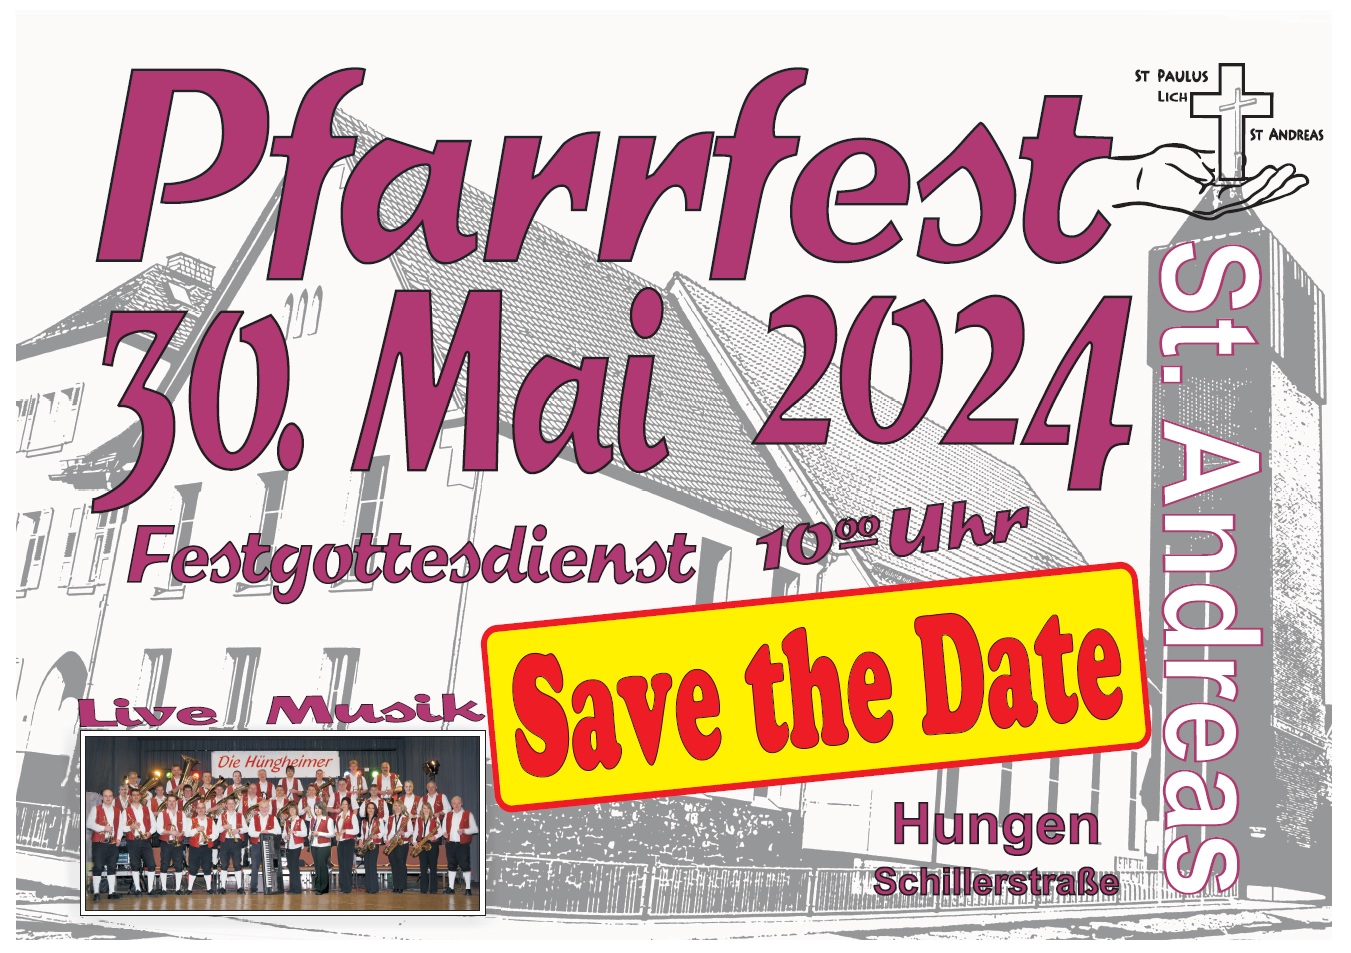 Pfarrfest in Hungen am 30. Mai 2024 (c) St. Paulus und St. Andreas Lich